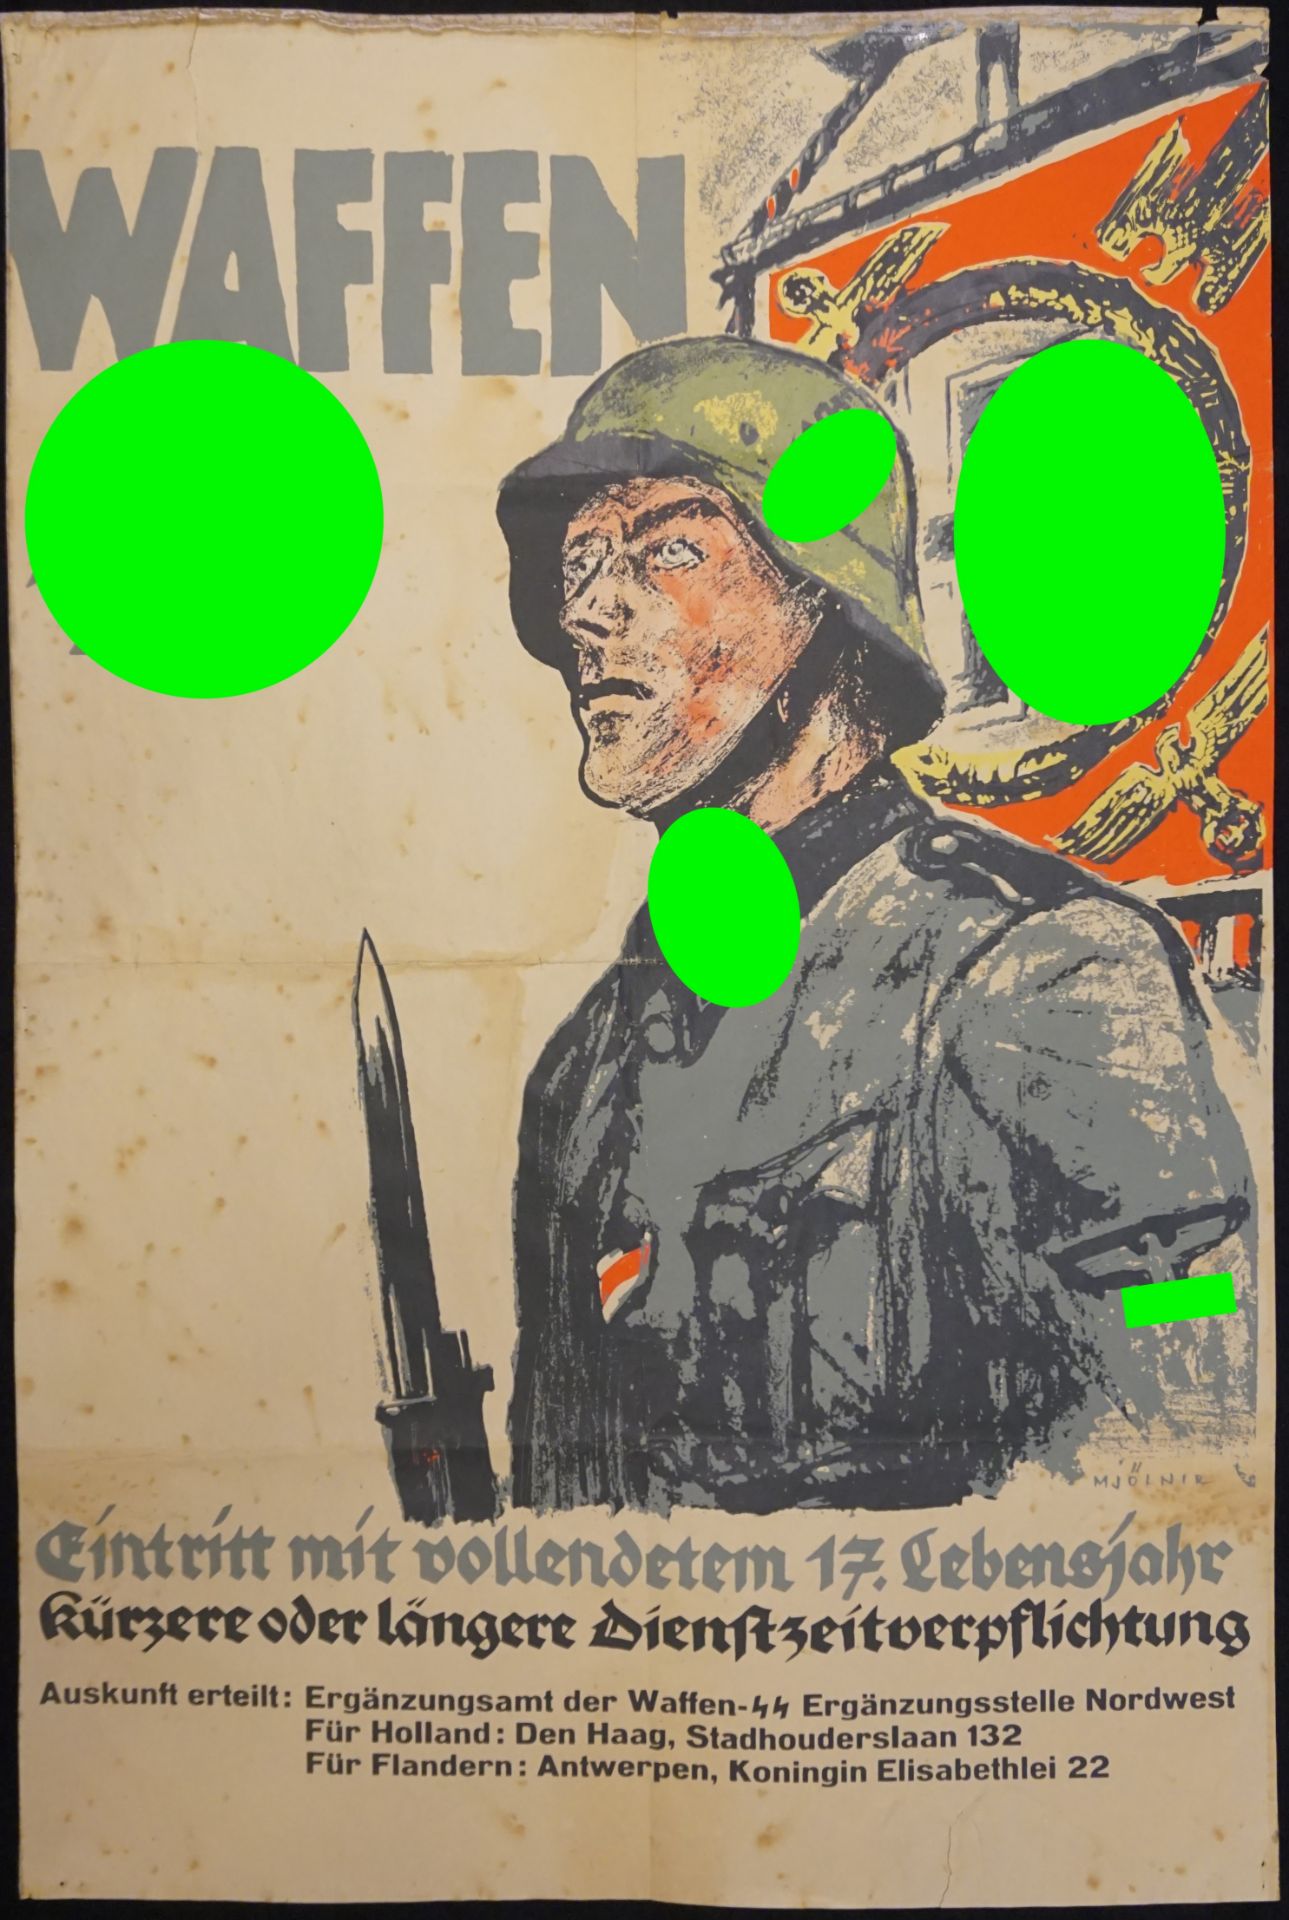 Affiches de la Waffen SS. Waffen SS poster. 